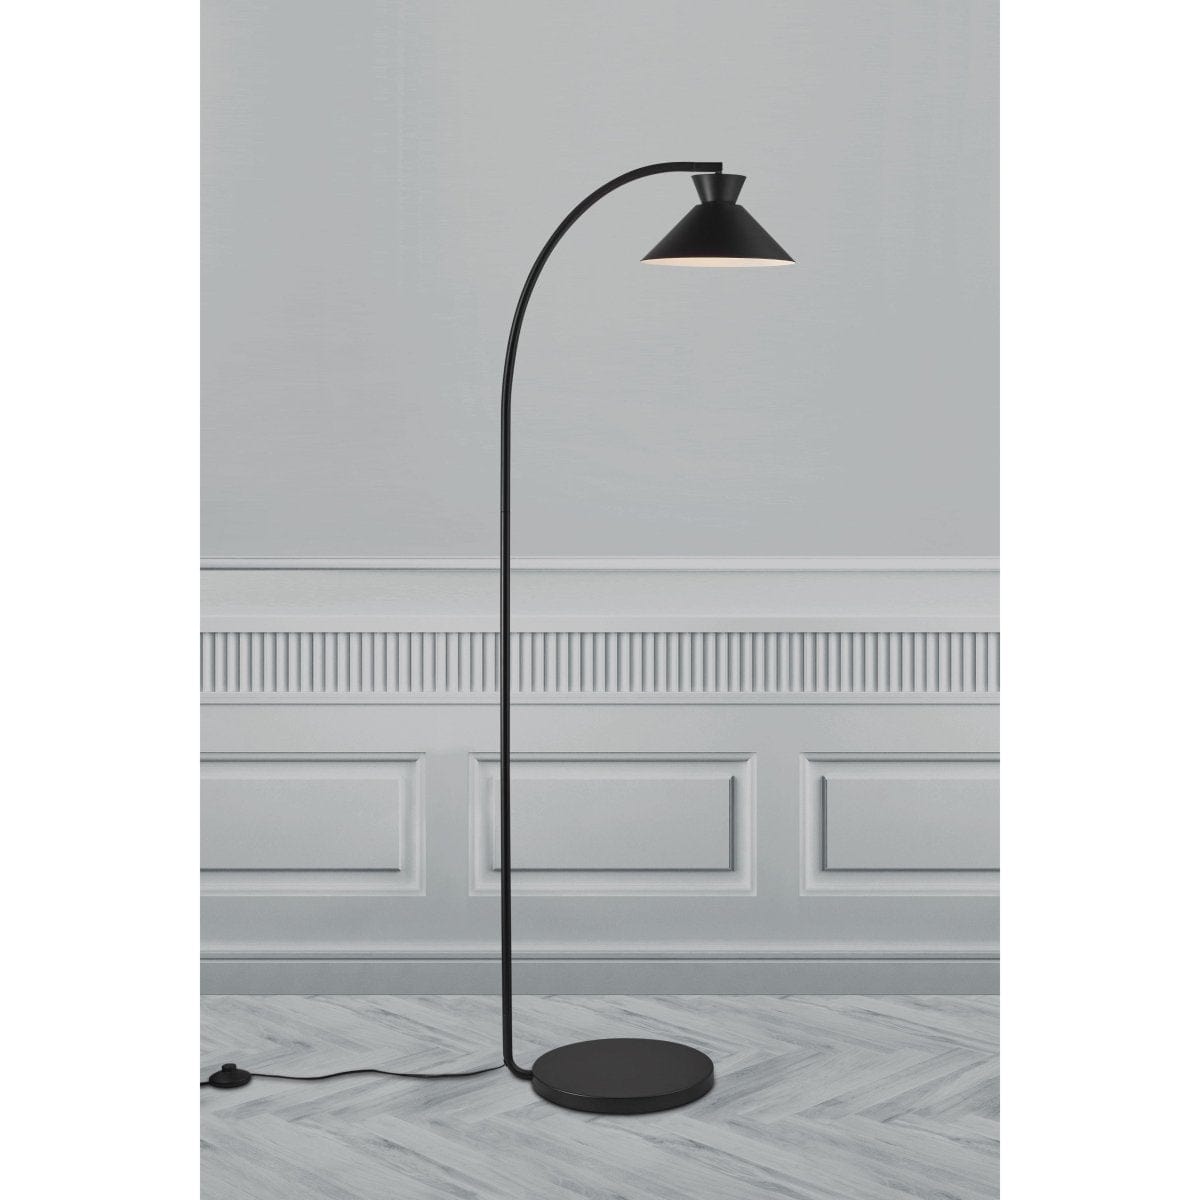 Nordlux Floor Lamp Black Dial Floor Lamp, white or black